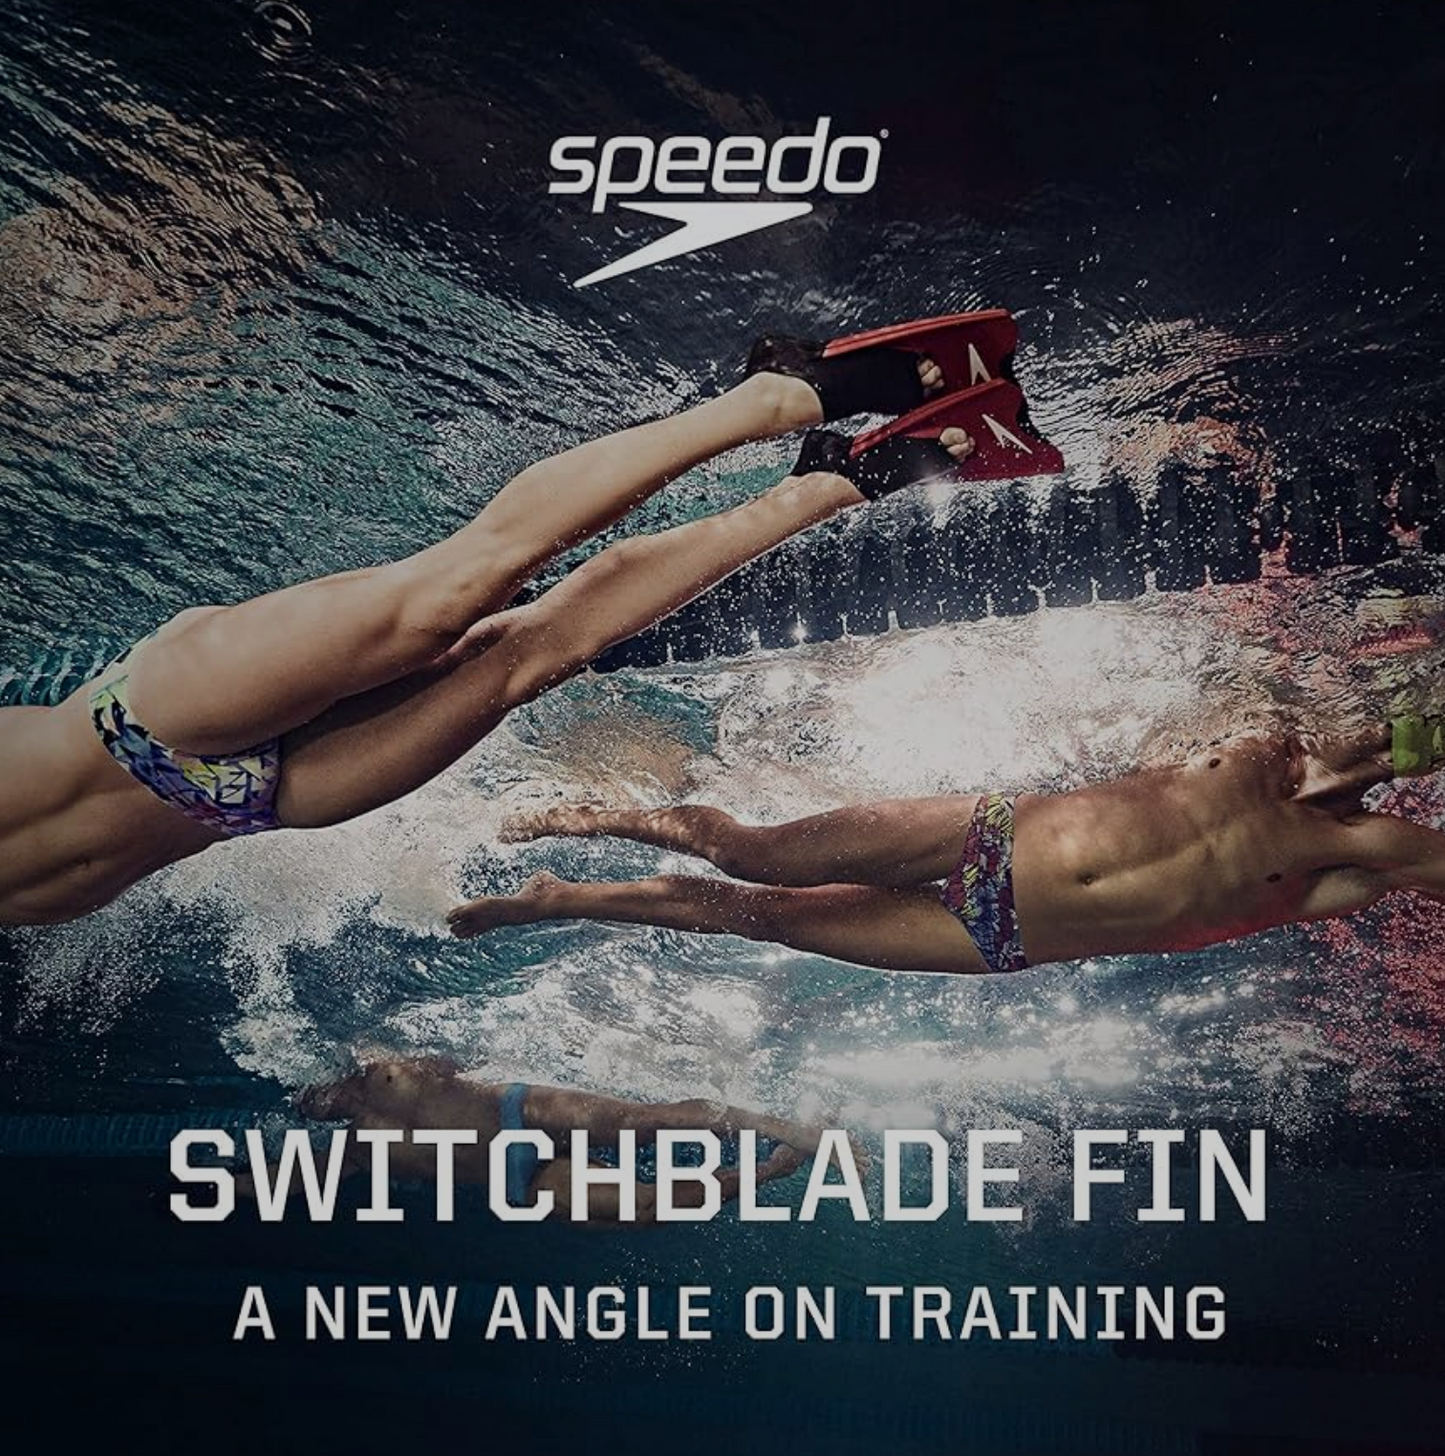 Switchblade Training Fins